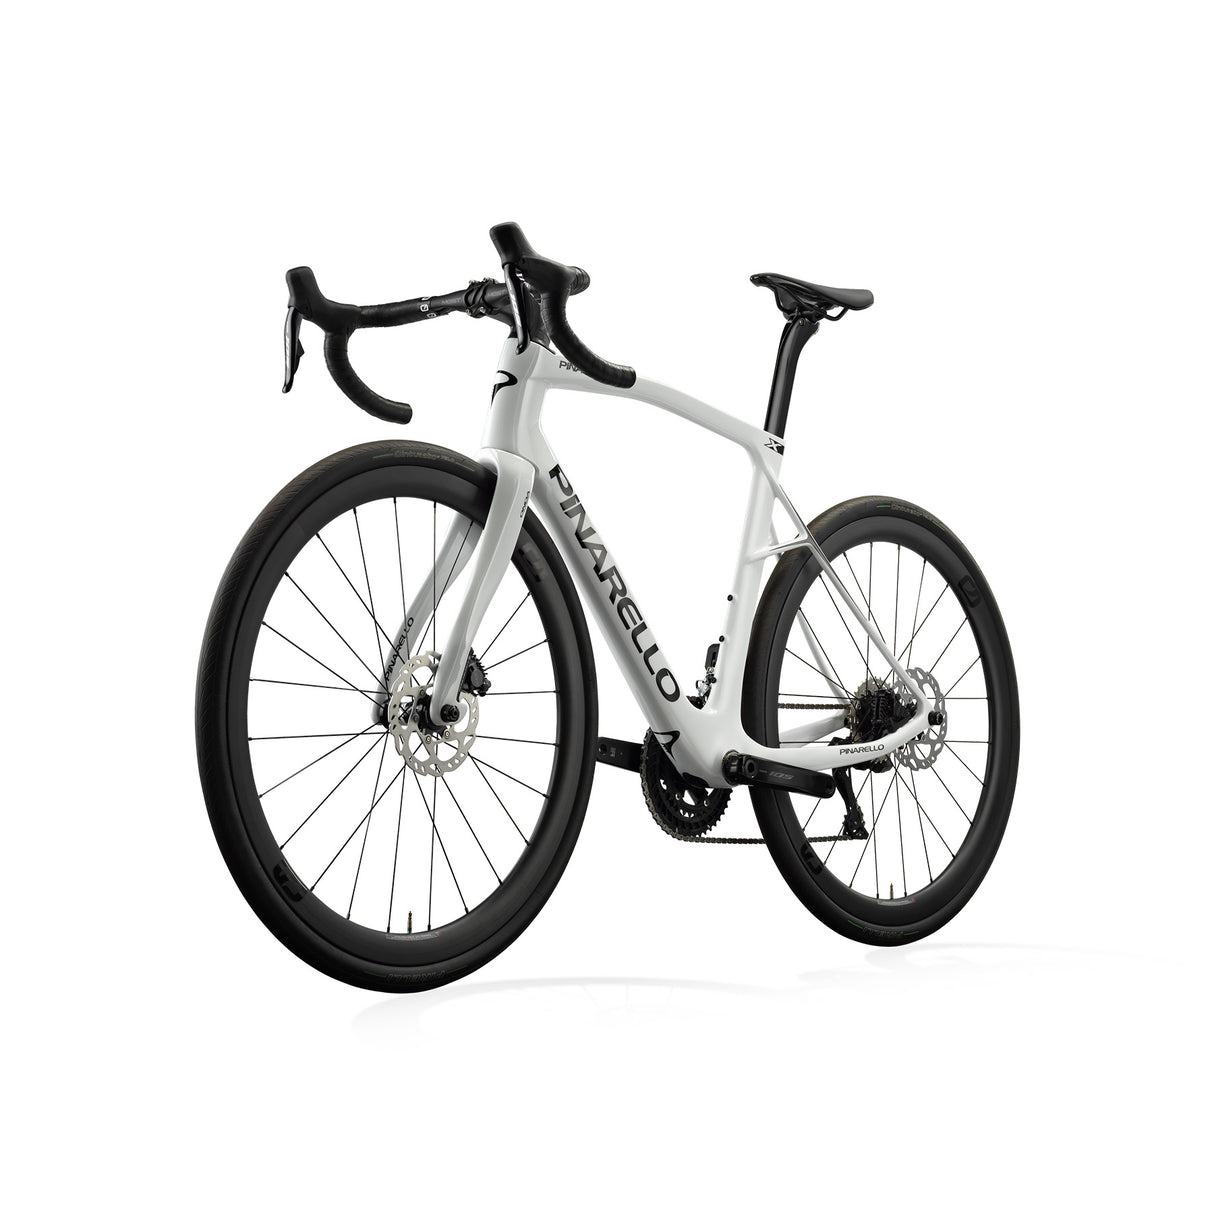 Pinarello X5 Shimano 105 Di2 | Strictly Bicycles